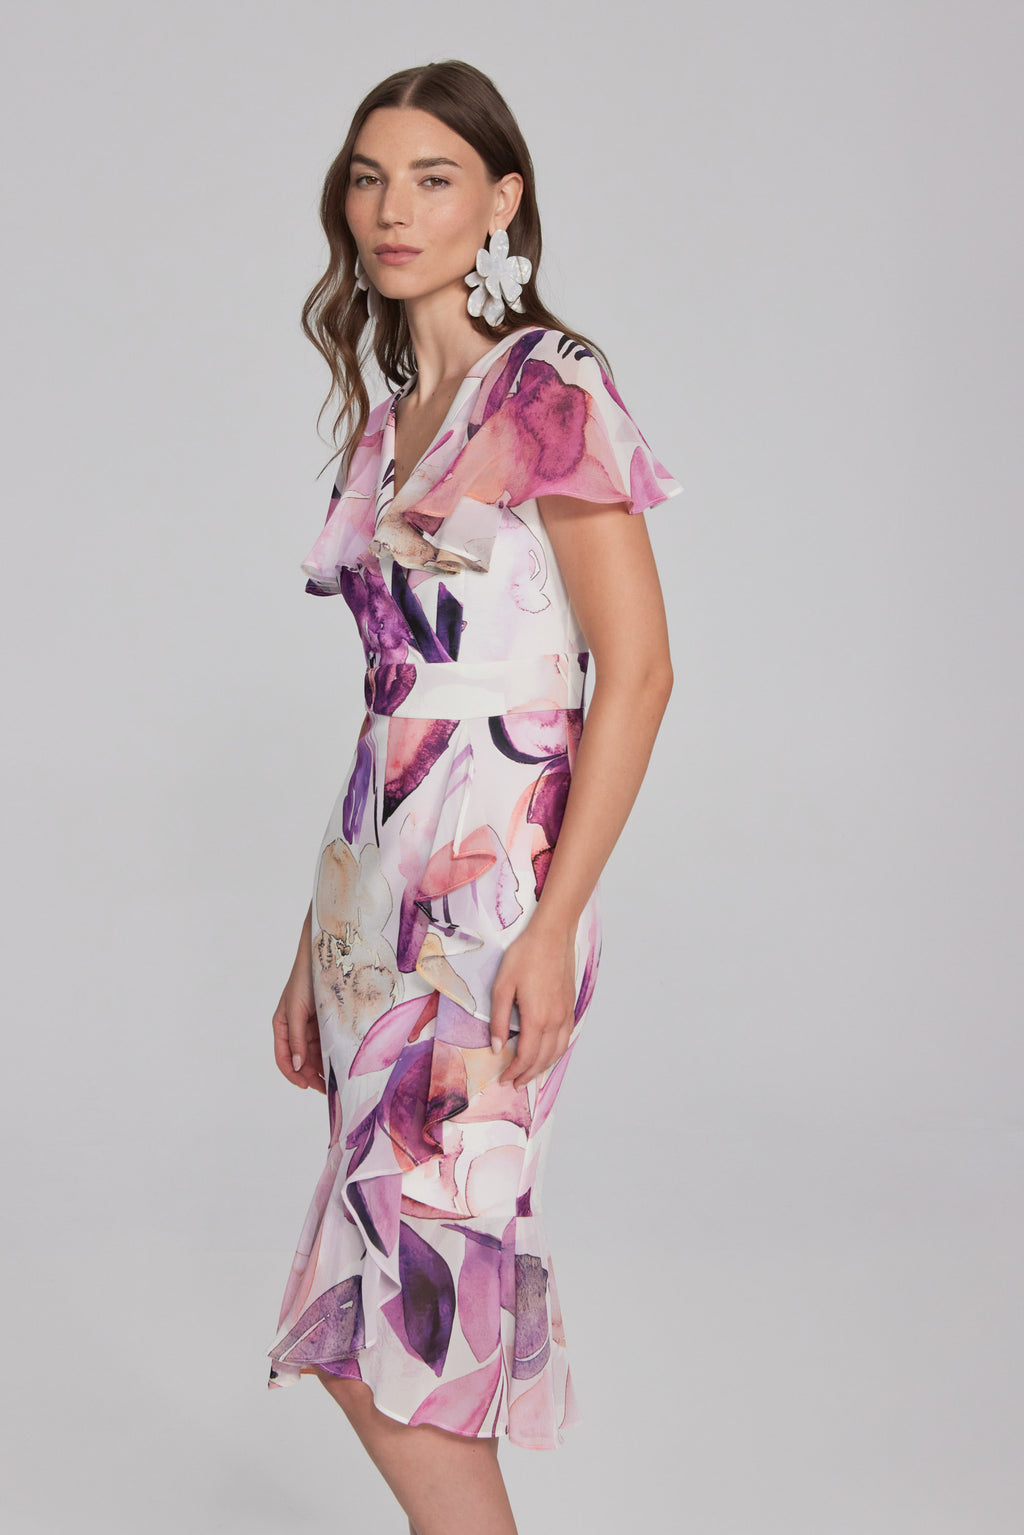 Joseph Ribkoff Vanilla/Multi Floral Print Dress Style 241732